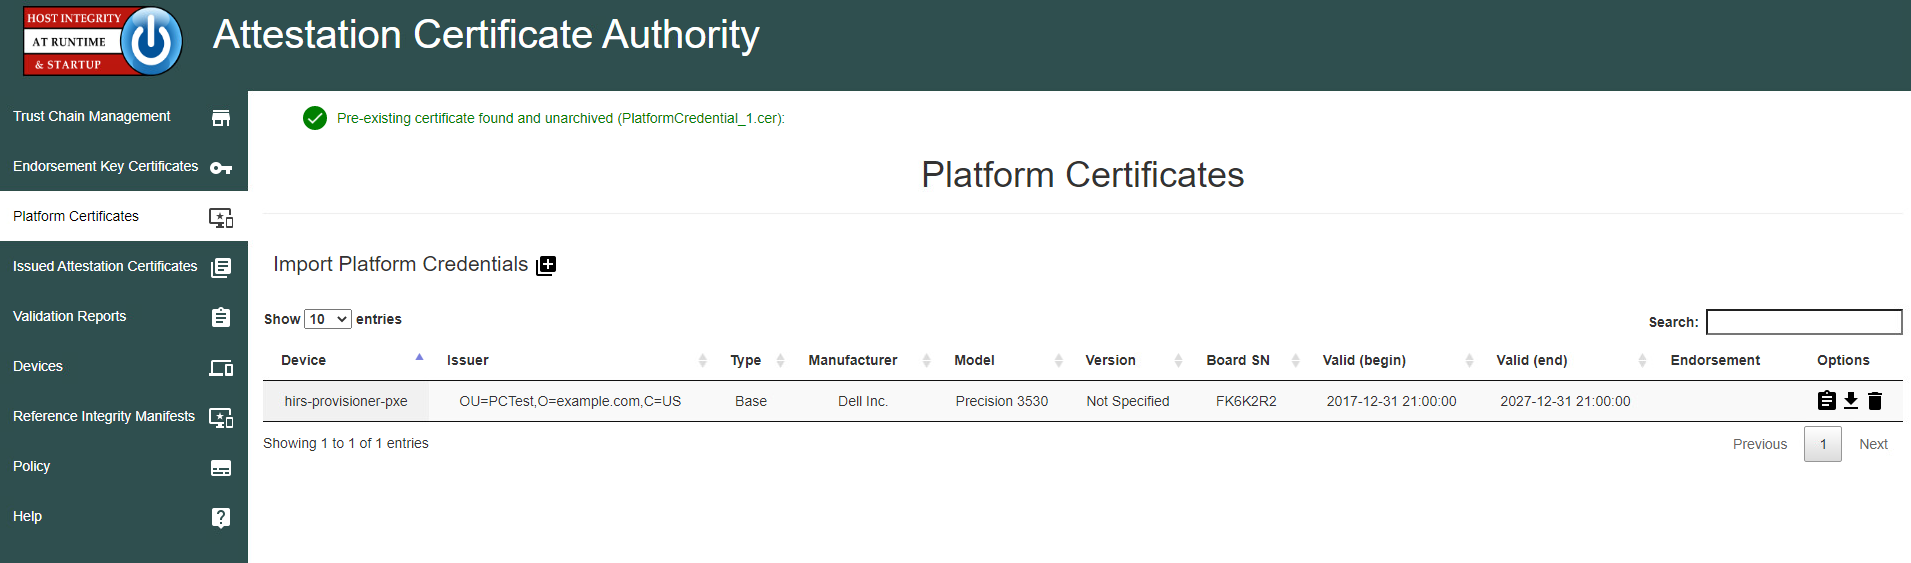 Screenshot of displaying a list of platform certificates under the Platform Certificates tab on the HIRS ACA web portal